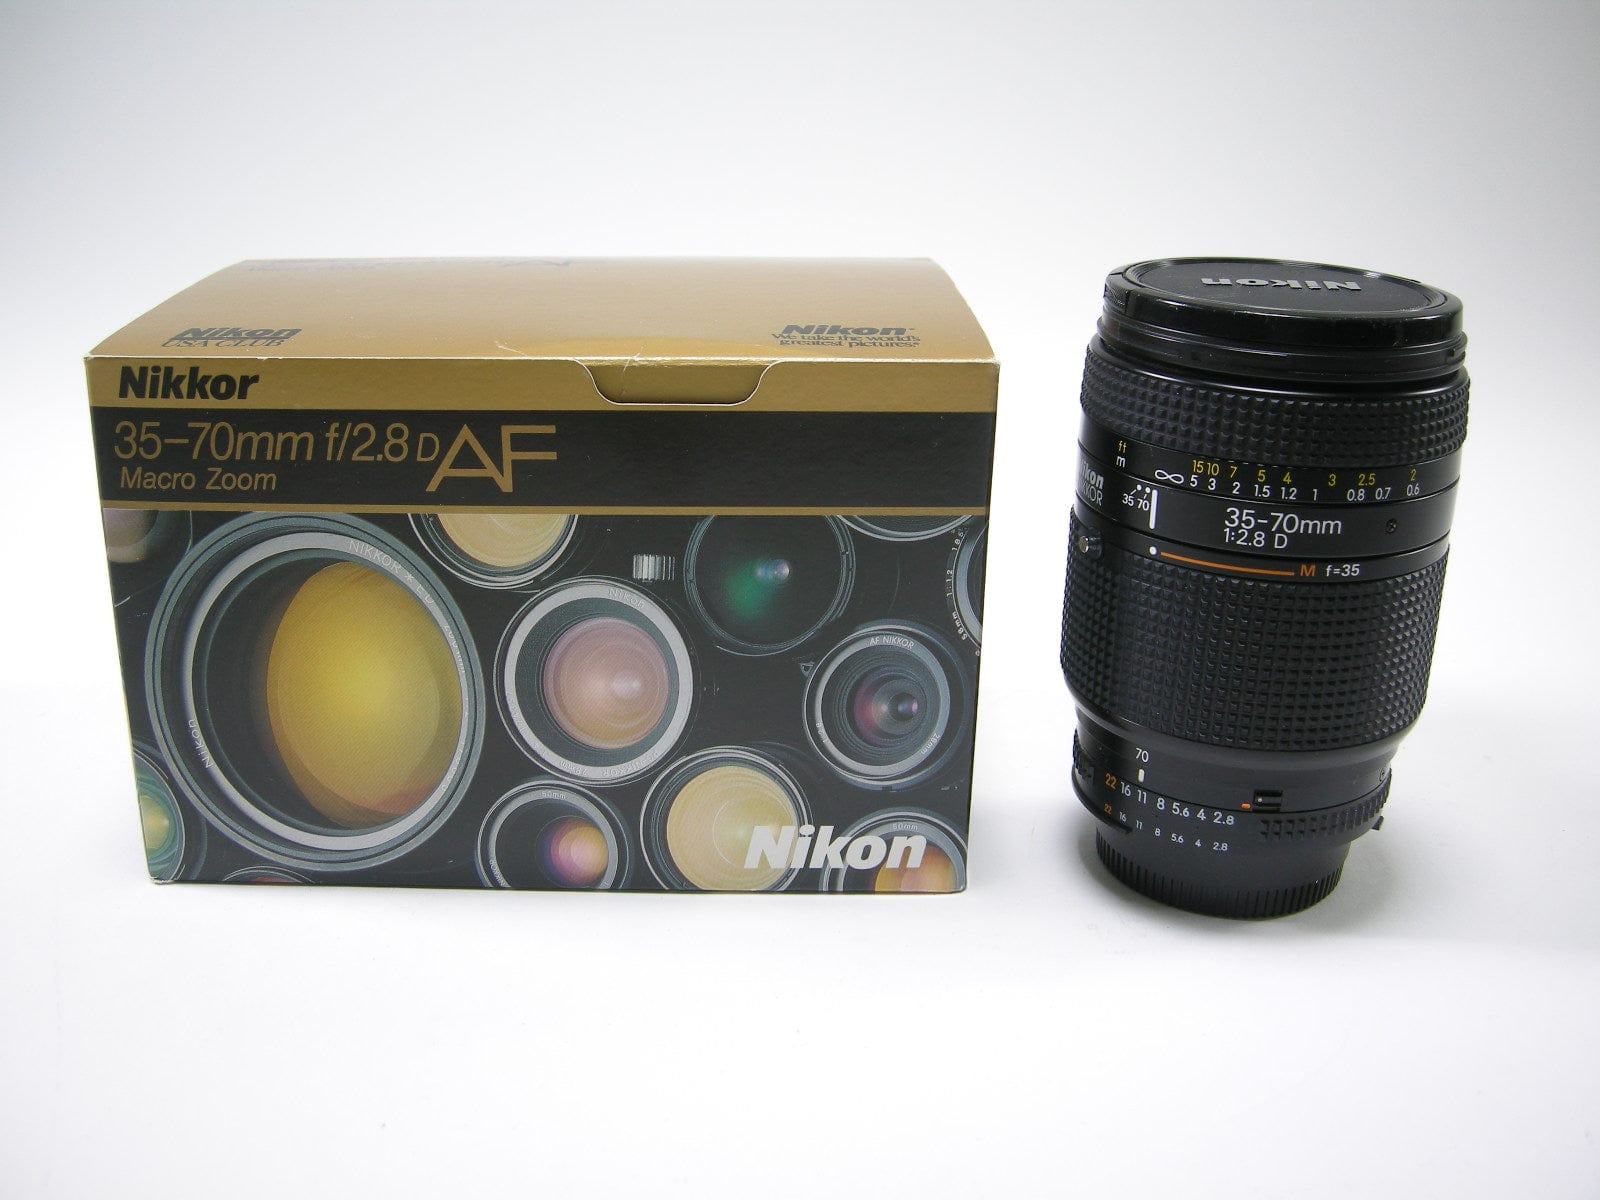 Nikon AF Nikkor 35-70mm f2.8D Macro Zoom